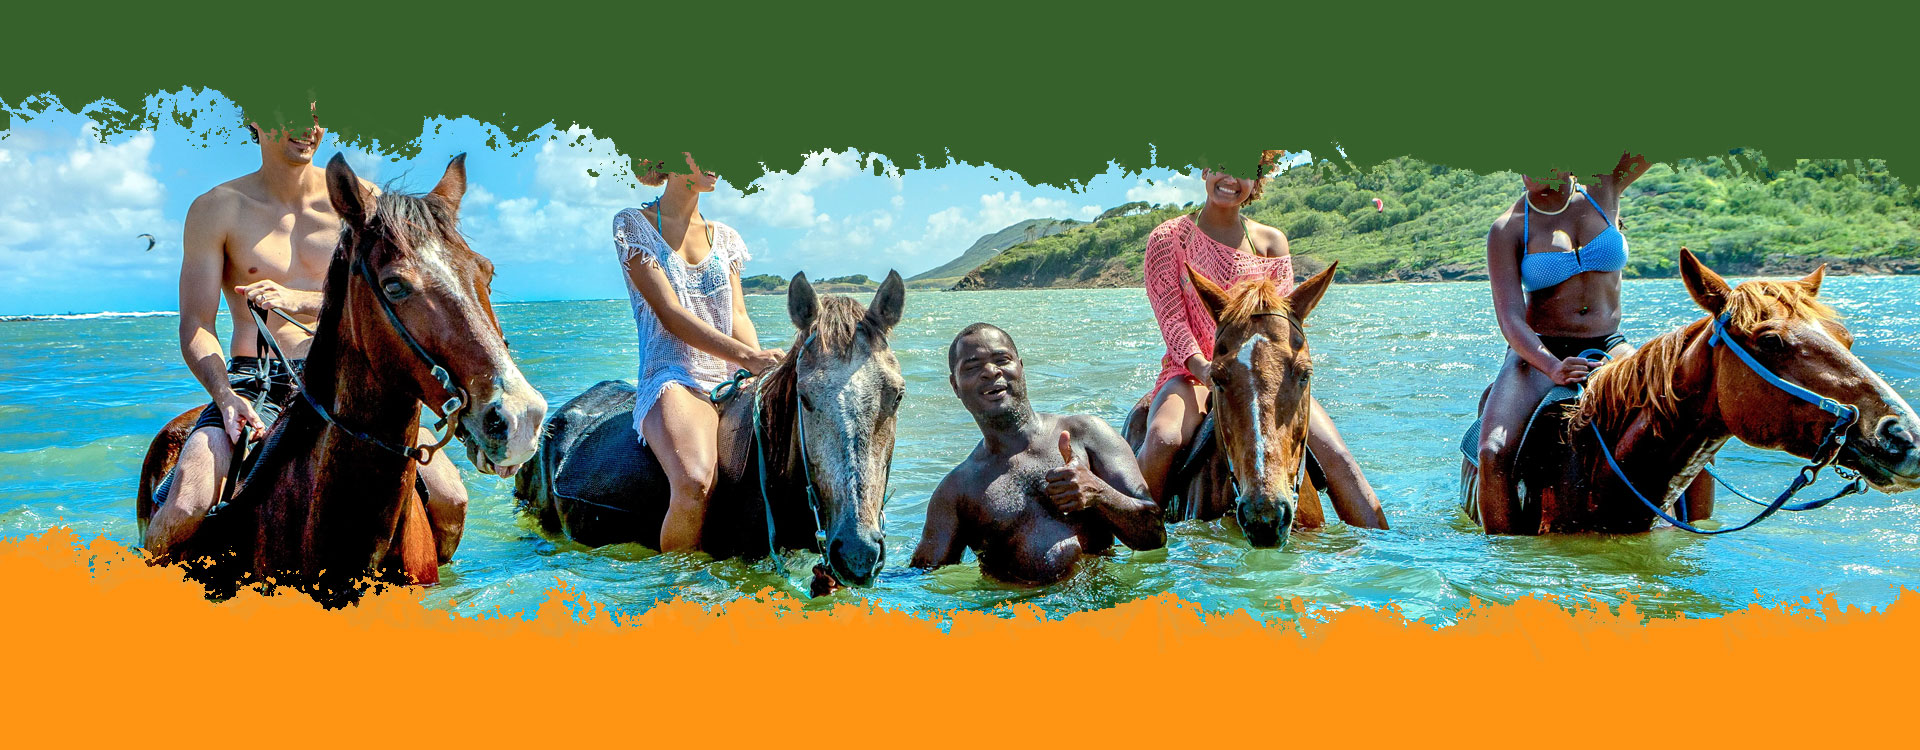 triple j tour jamaica horseback riding